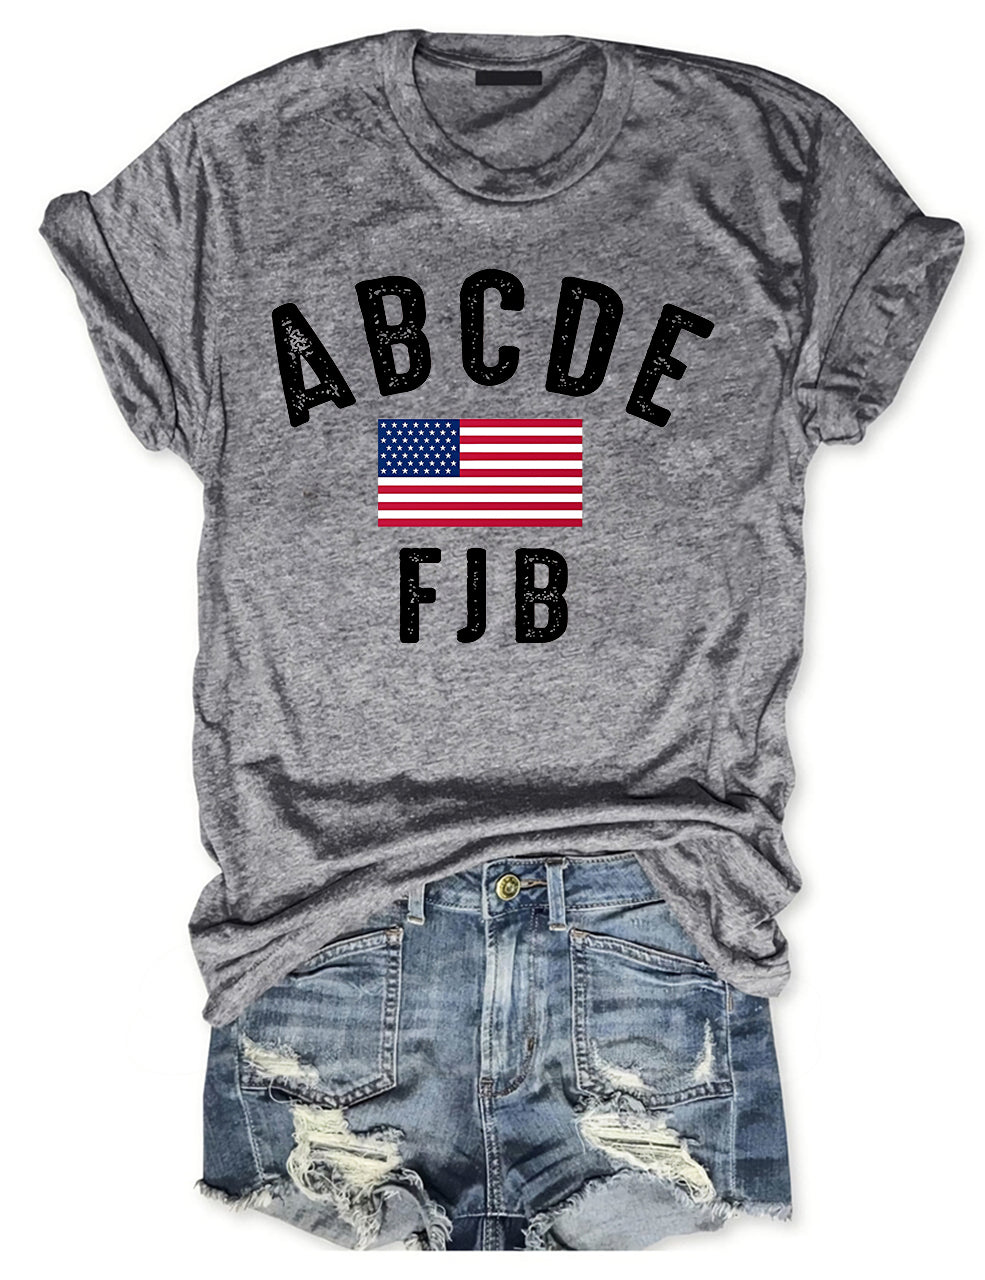 ABCDE FJB T-shirt